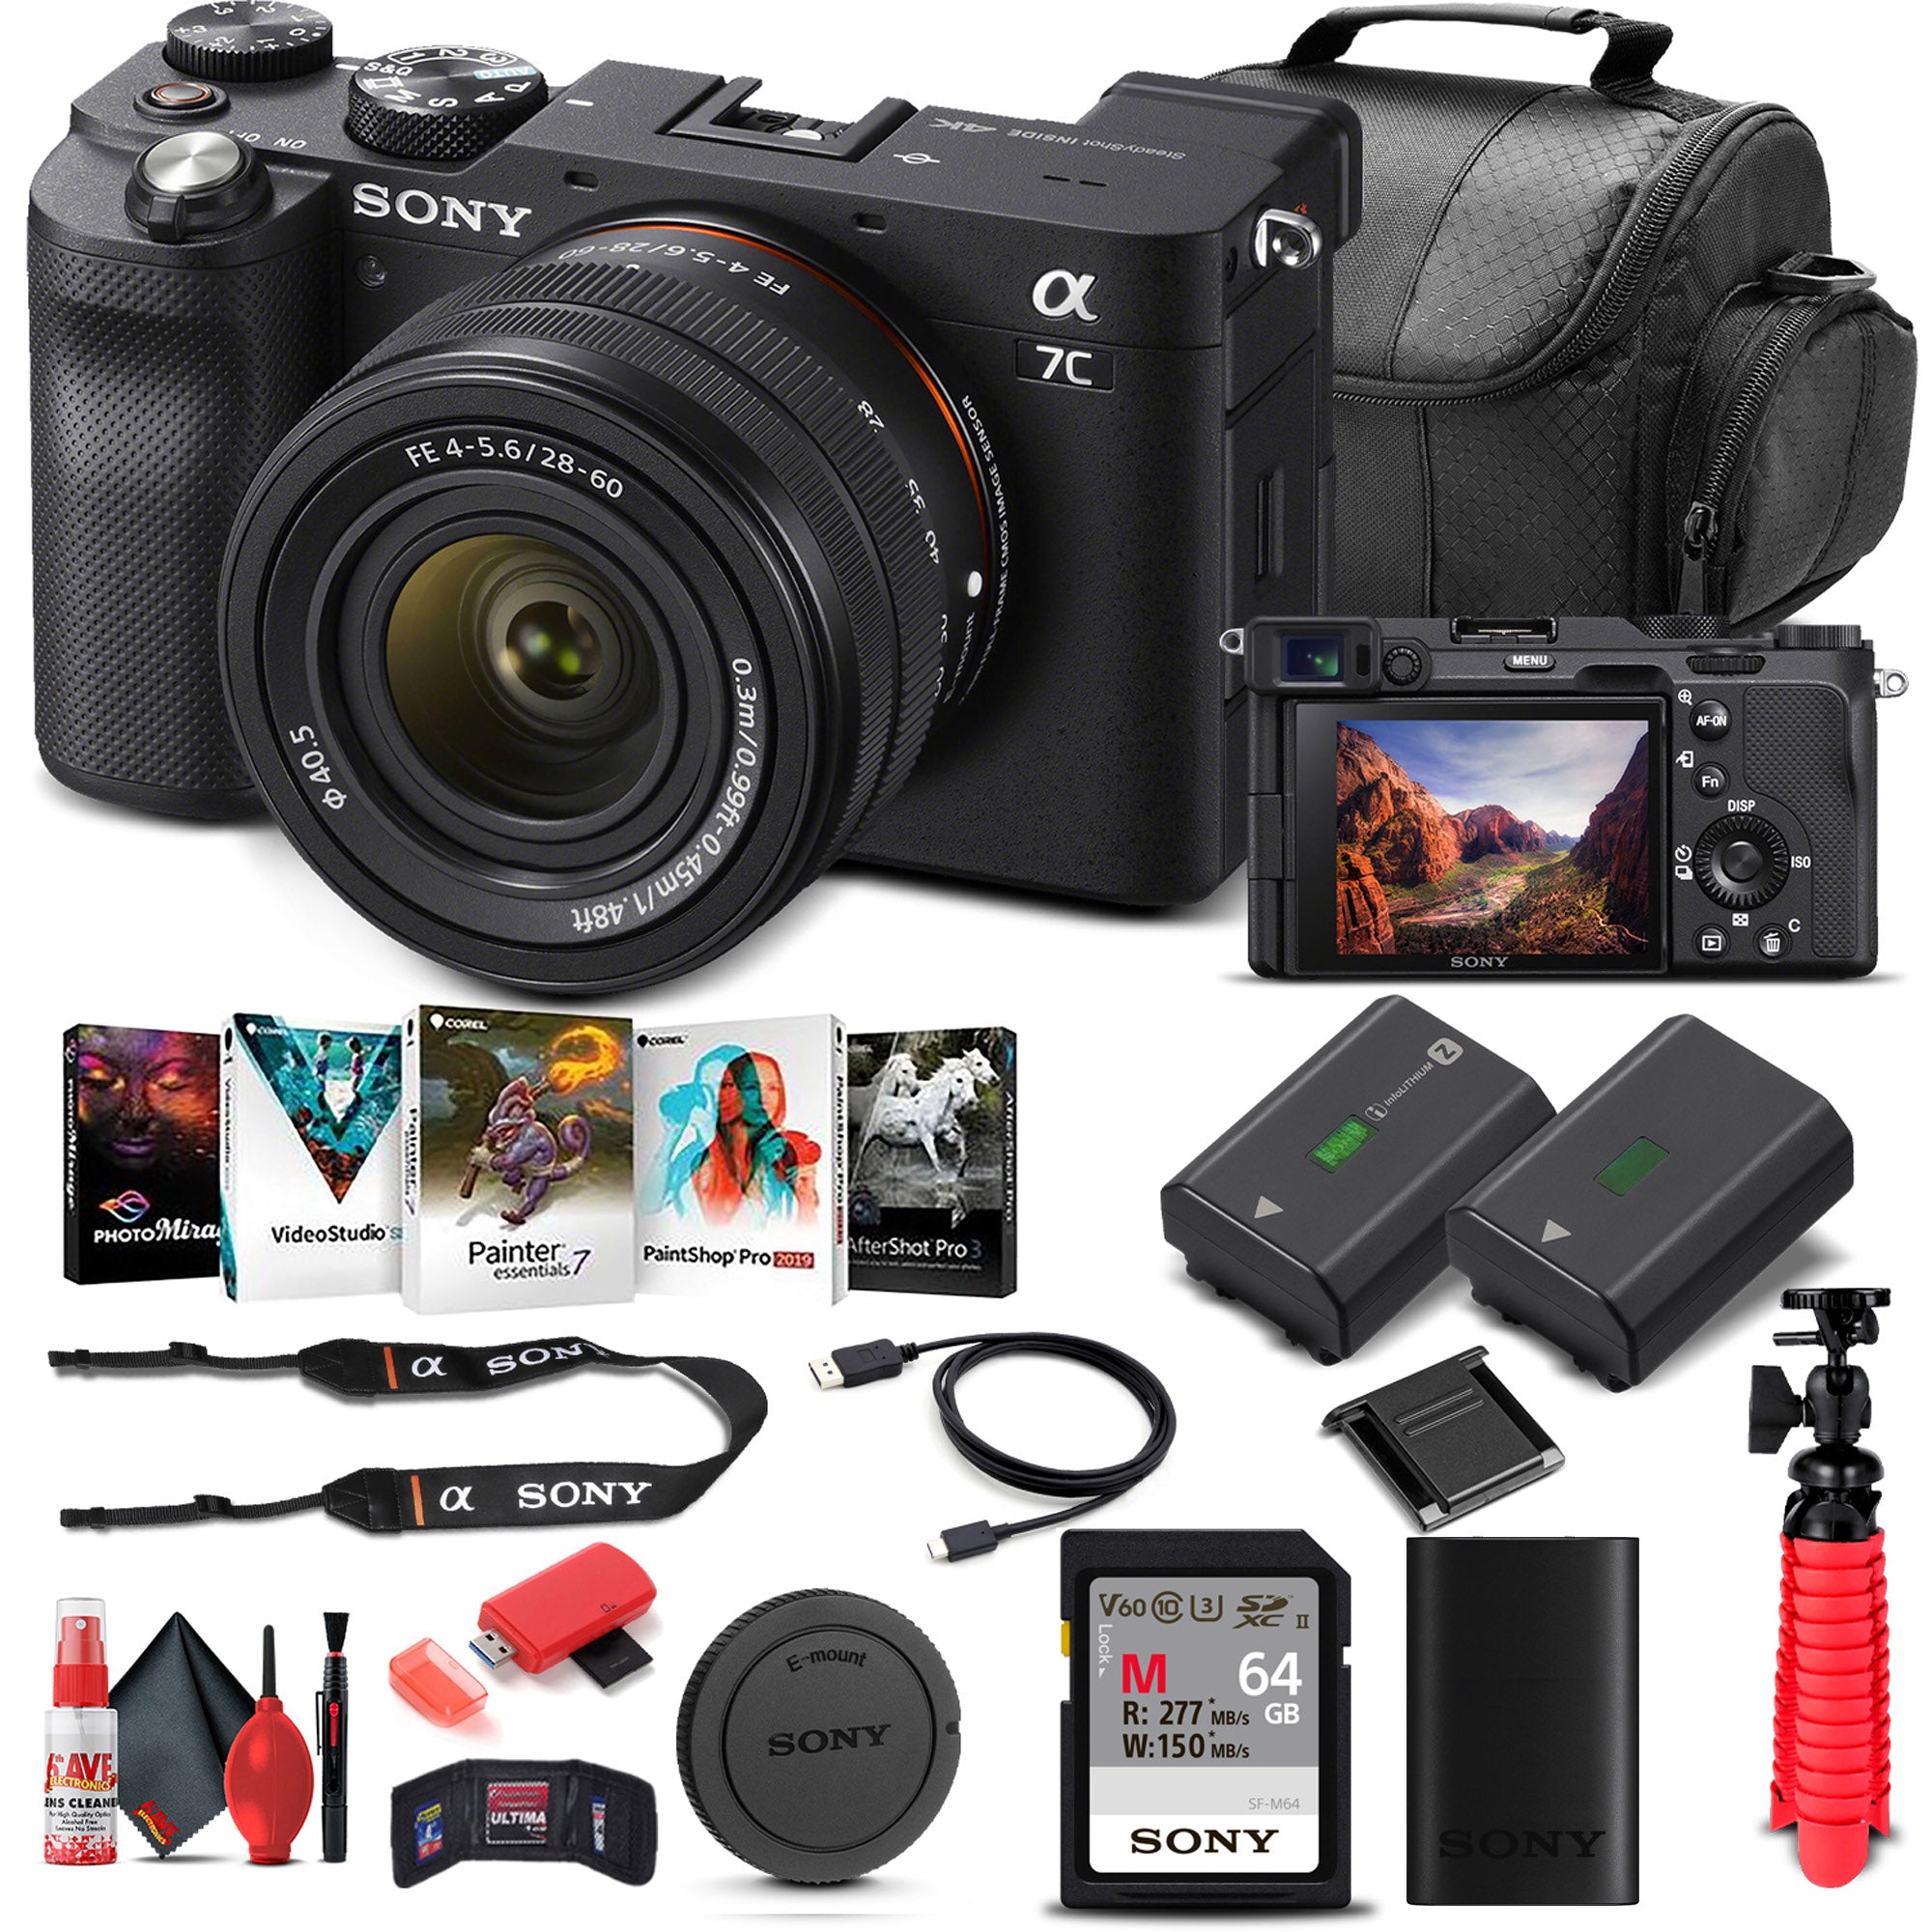 Sony Alpha a7C Mirrorless Camera W/ 28-60mm Lens Black ILCE7CL/B - Basic Bundle